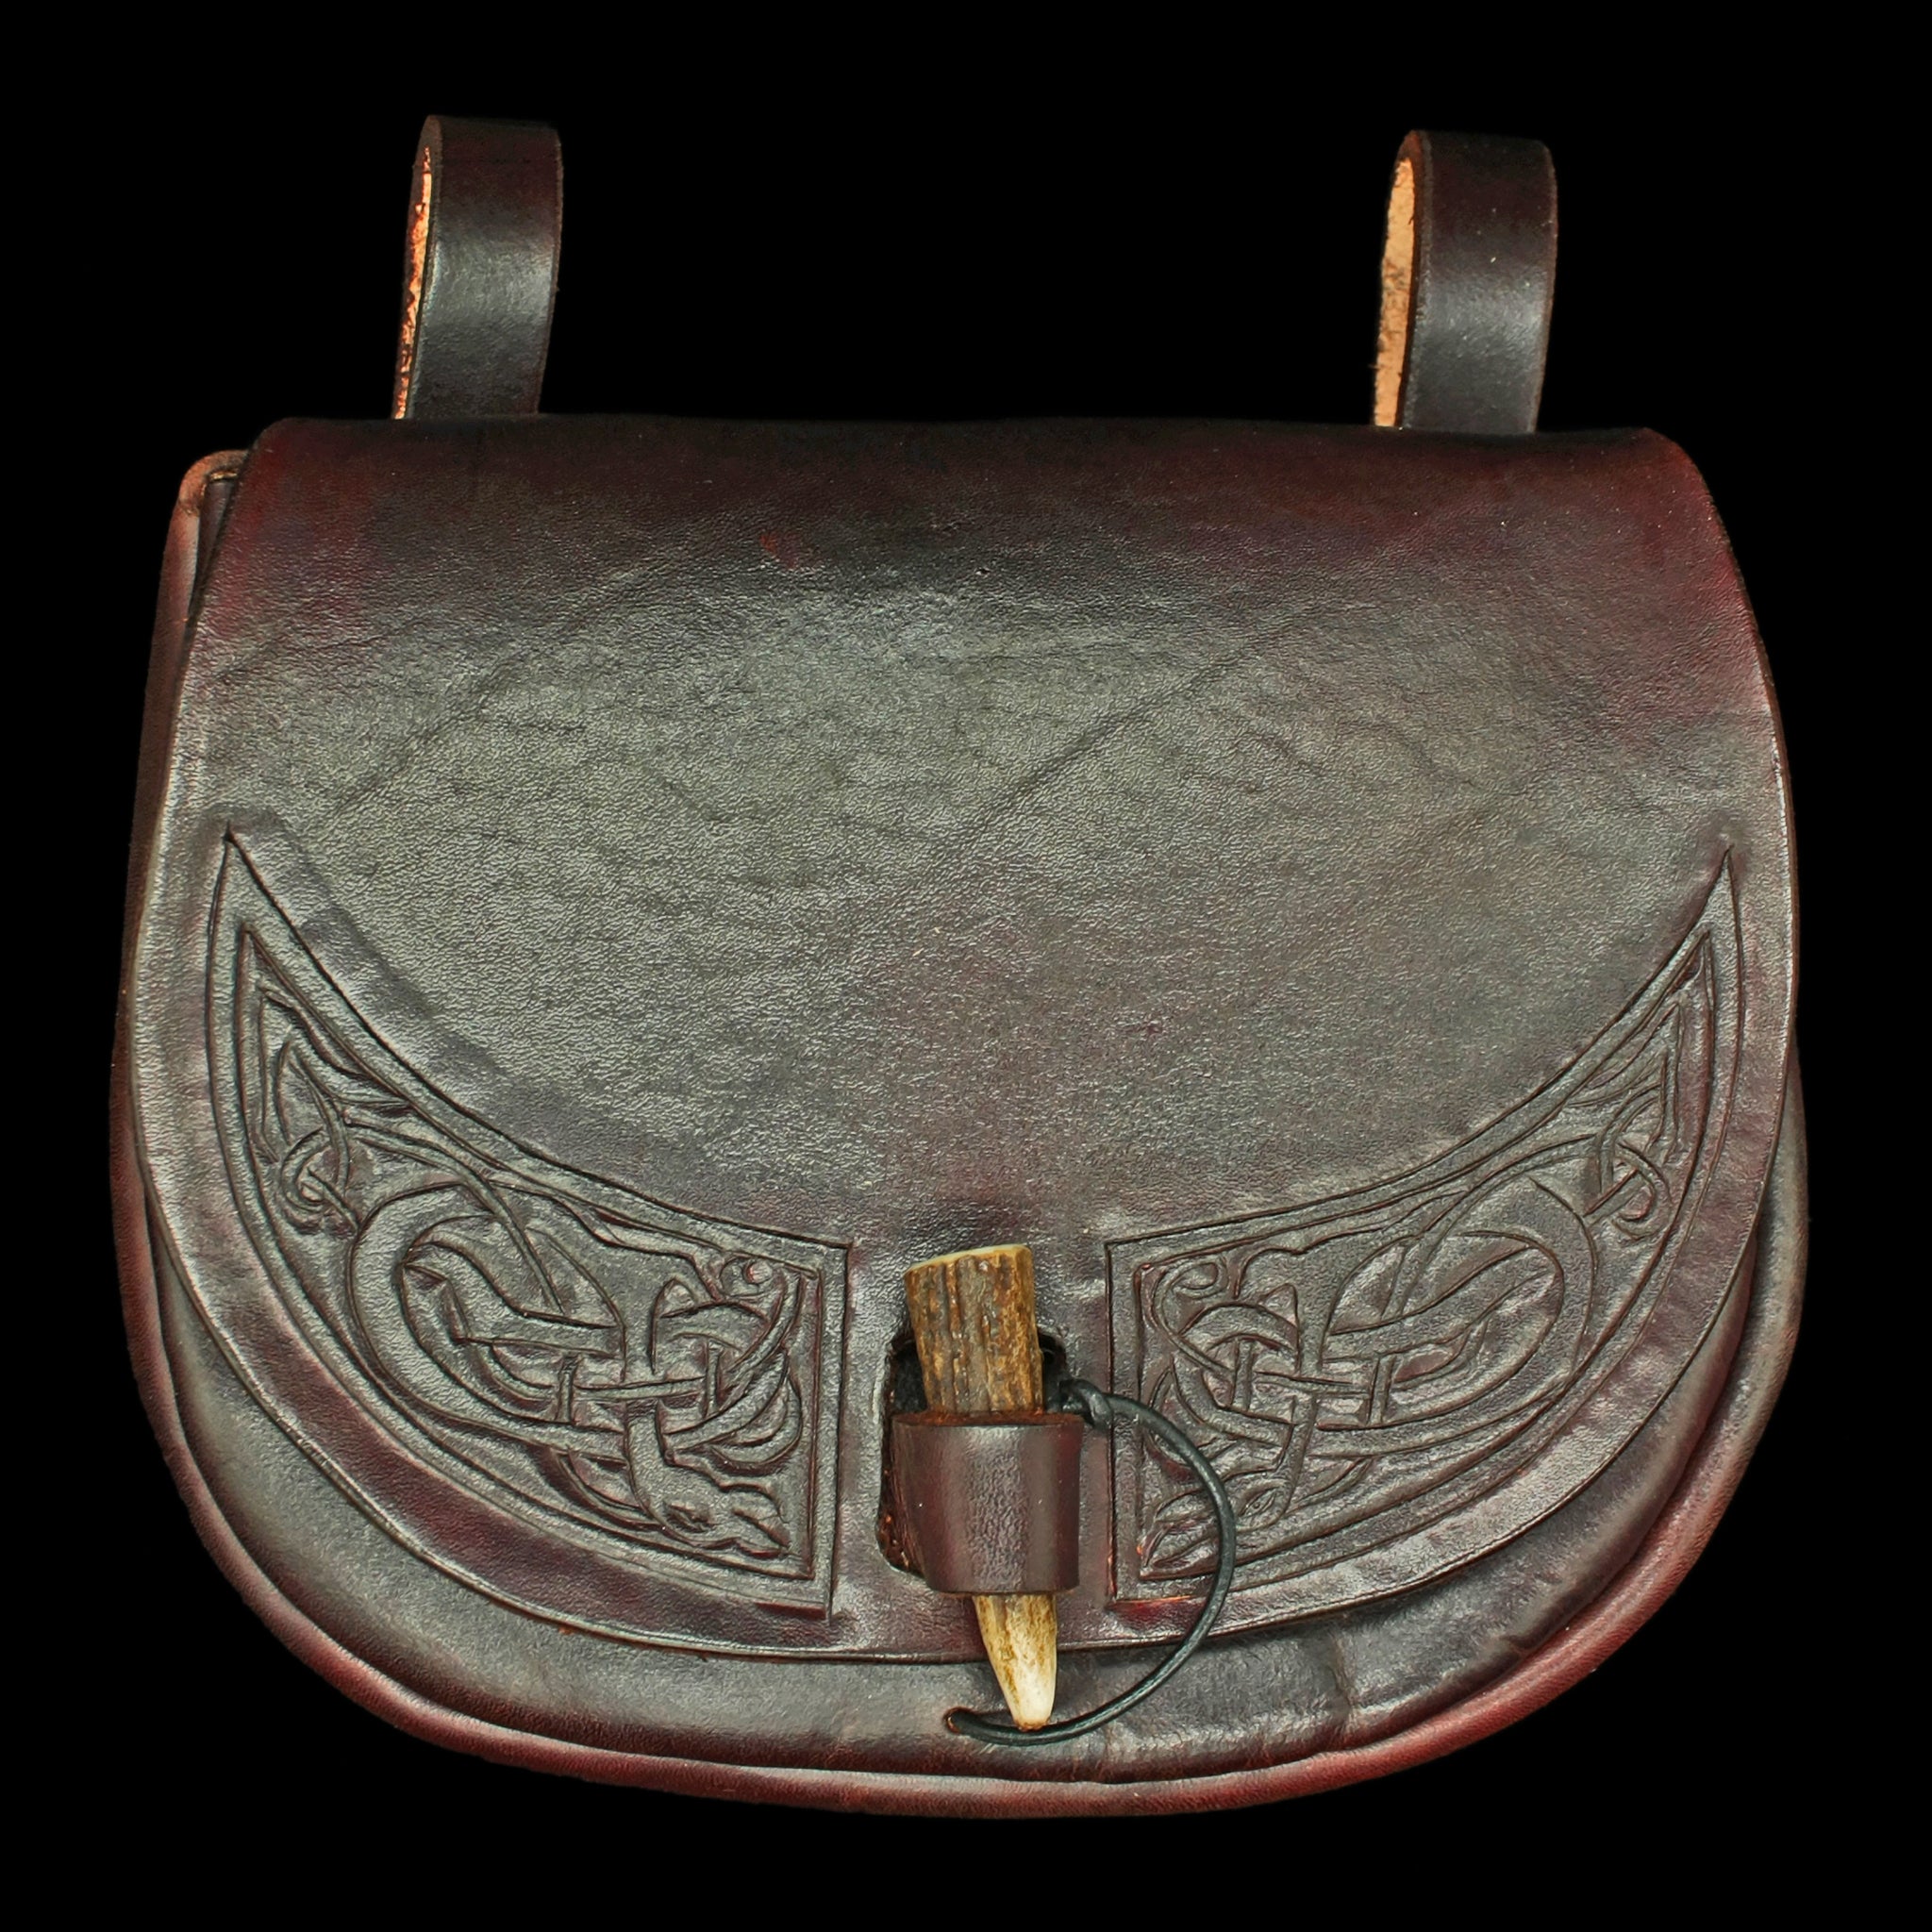 Wide Silver Morden Style Korean Style Women Hand Bags Replicas